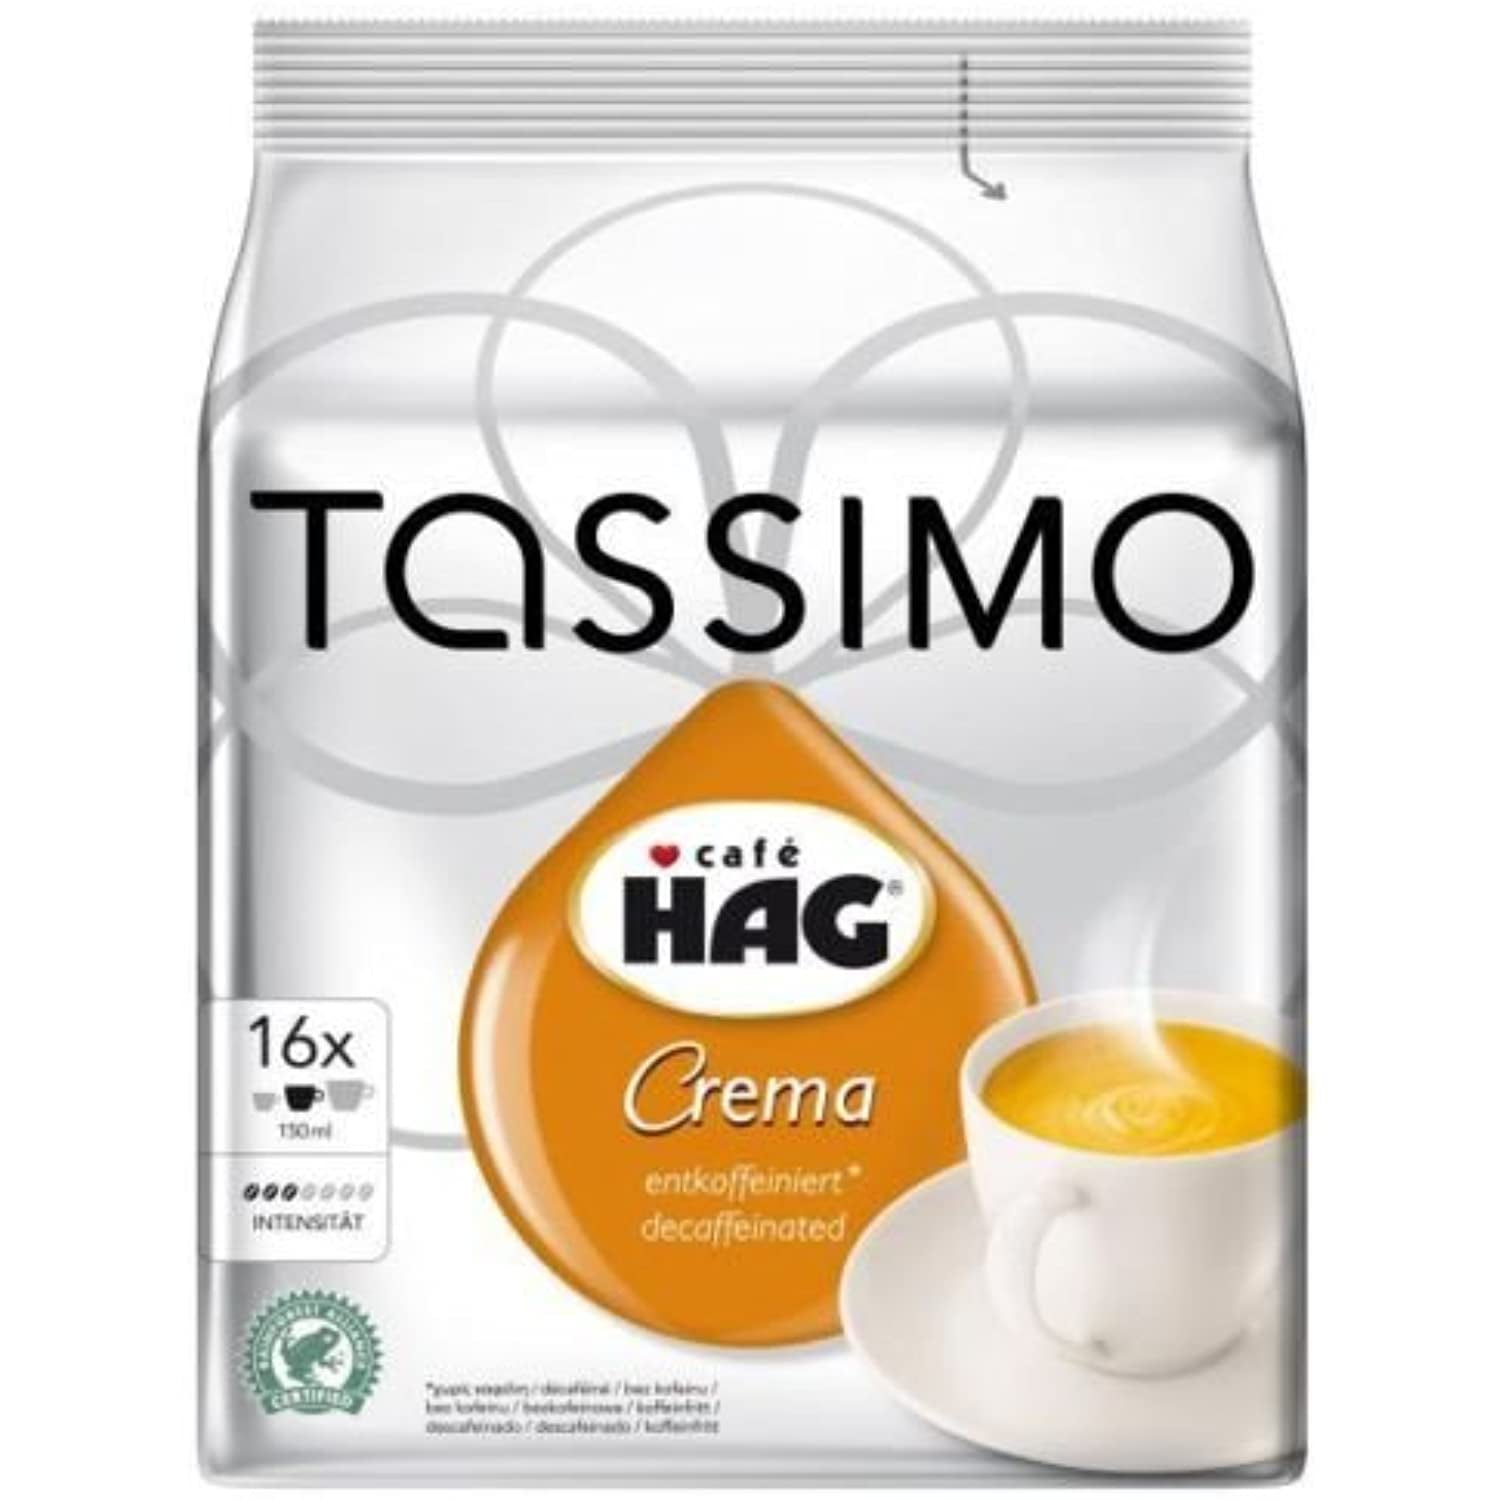 Dosettes Jacobs Caffè Creme Classico XL, T Disc Tassimo